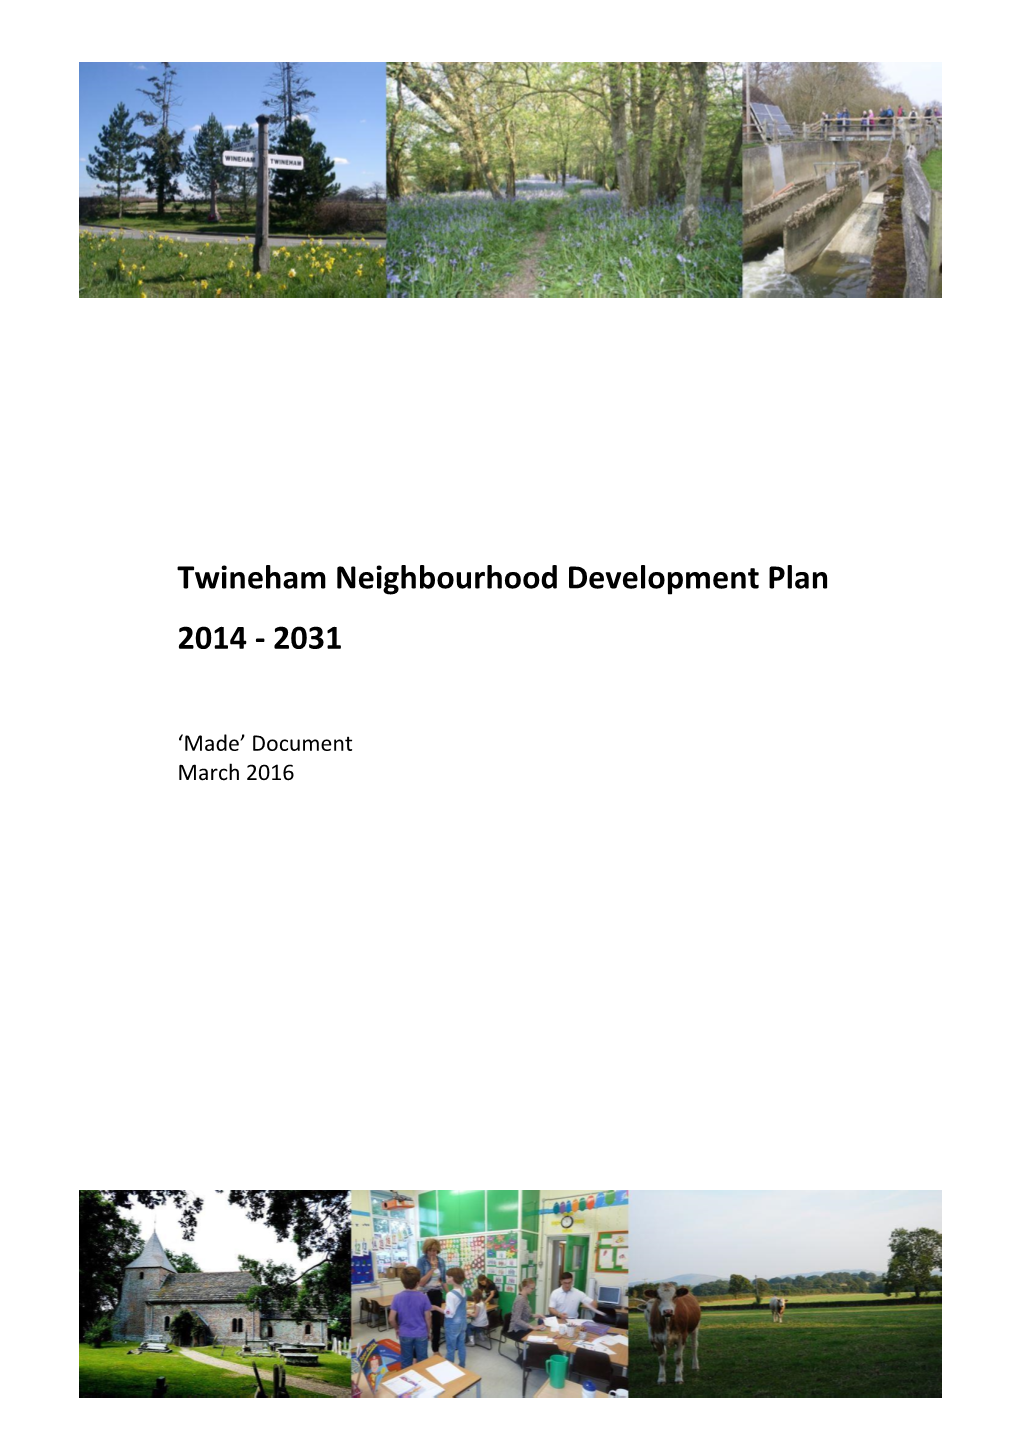 Twineham Neighbourhood Plan